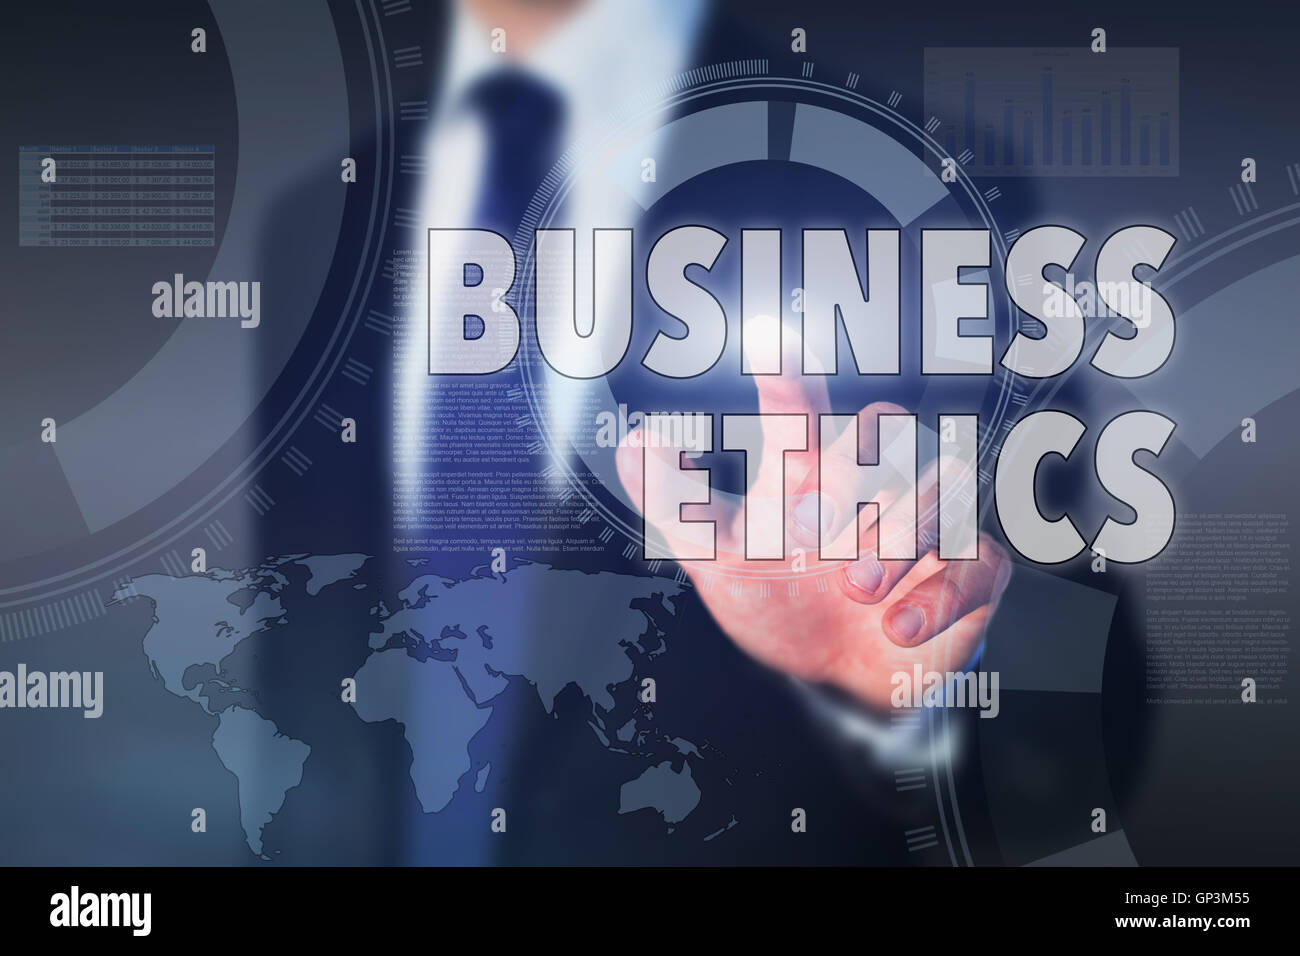 business ethics concept Stock Photo